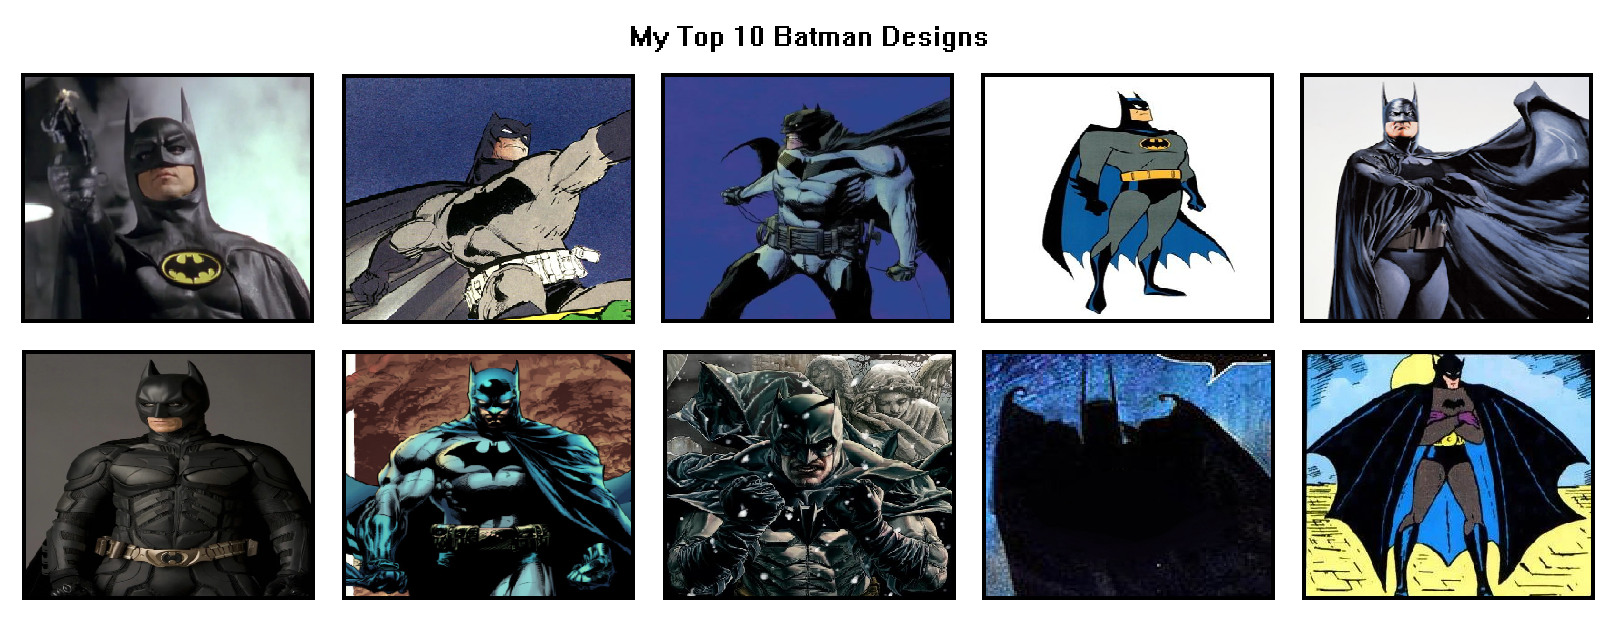 traducir Encommium Pasto My Top 10 Batman Designs by ARTZUME on DeviantArt